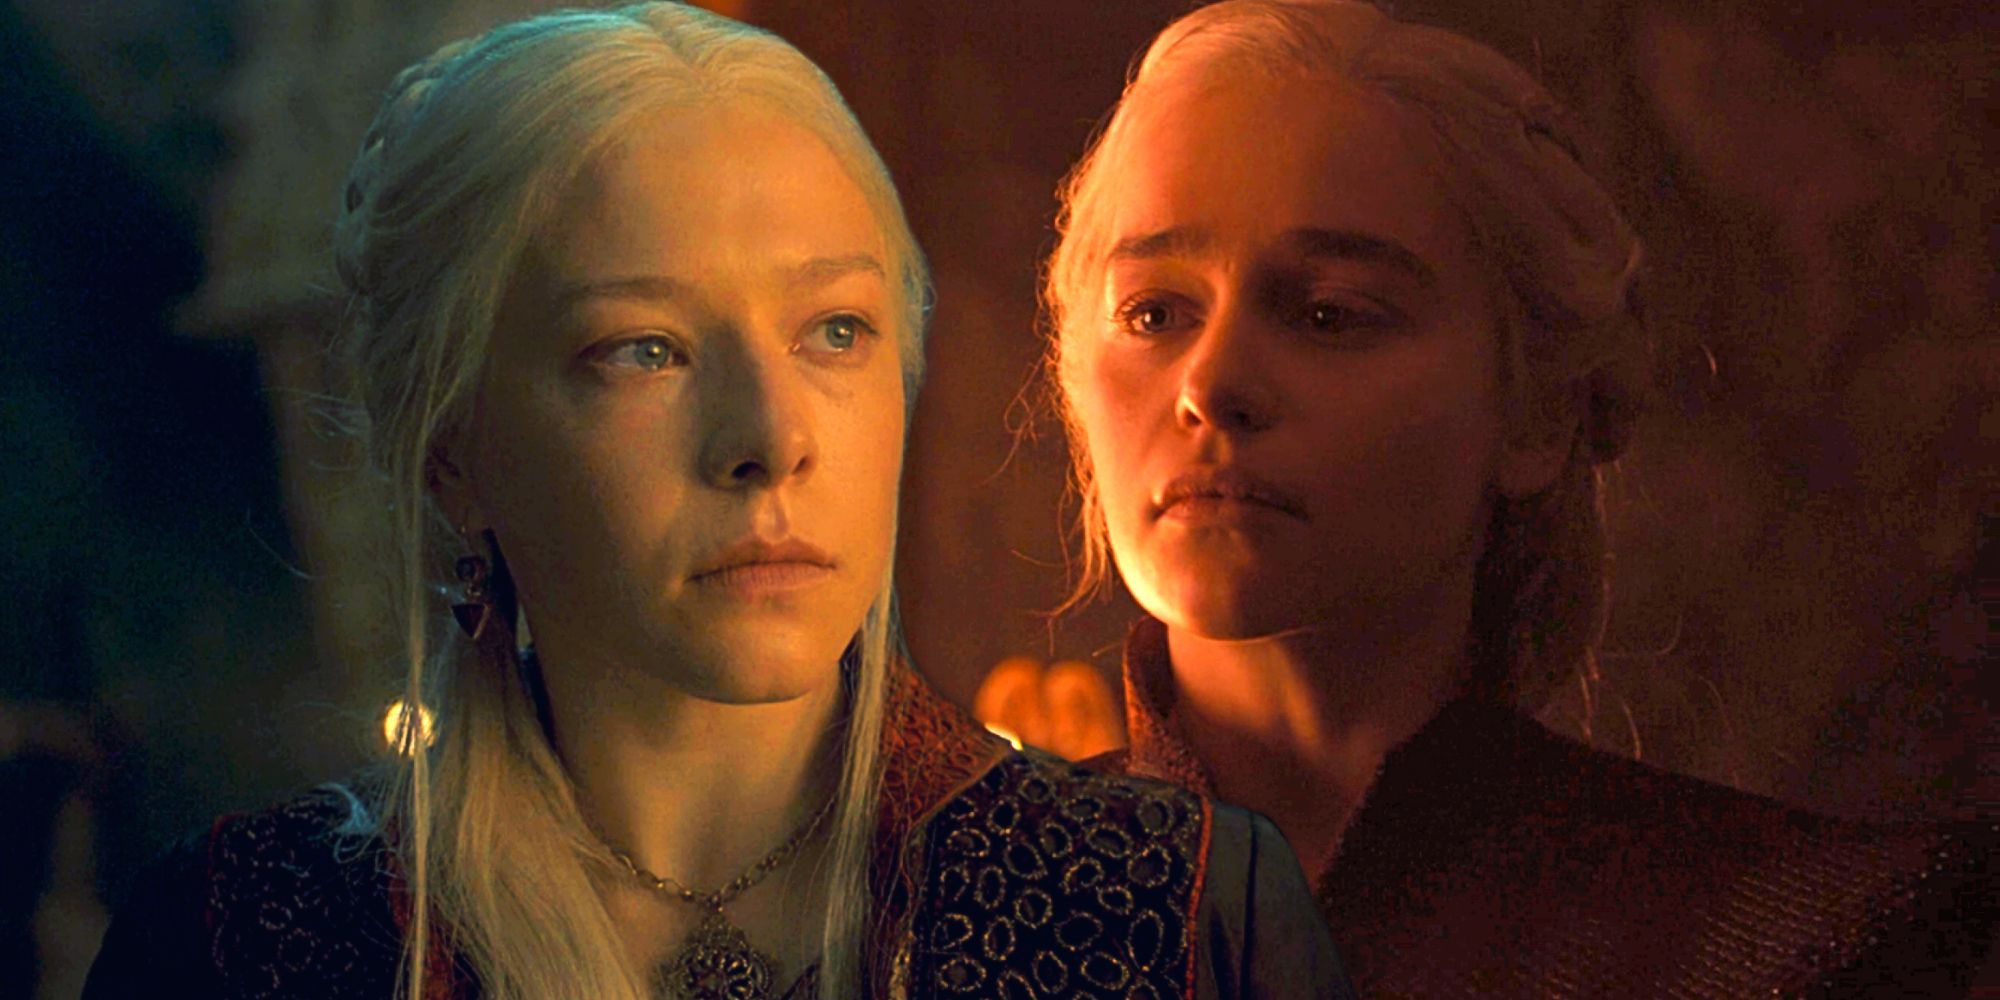 Emma D'Arcy as Rhaenyra Targaryen in House of the Dragon and Emilia Clarke as Daenerys Targaryen in Game of Thrones